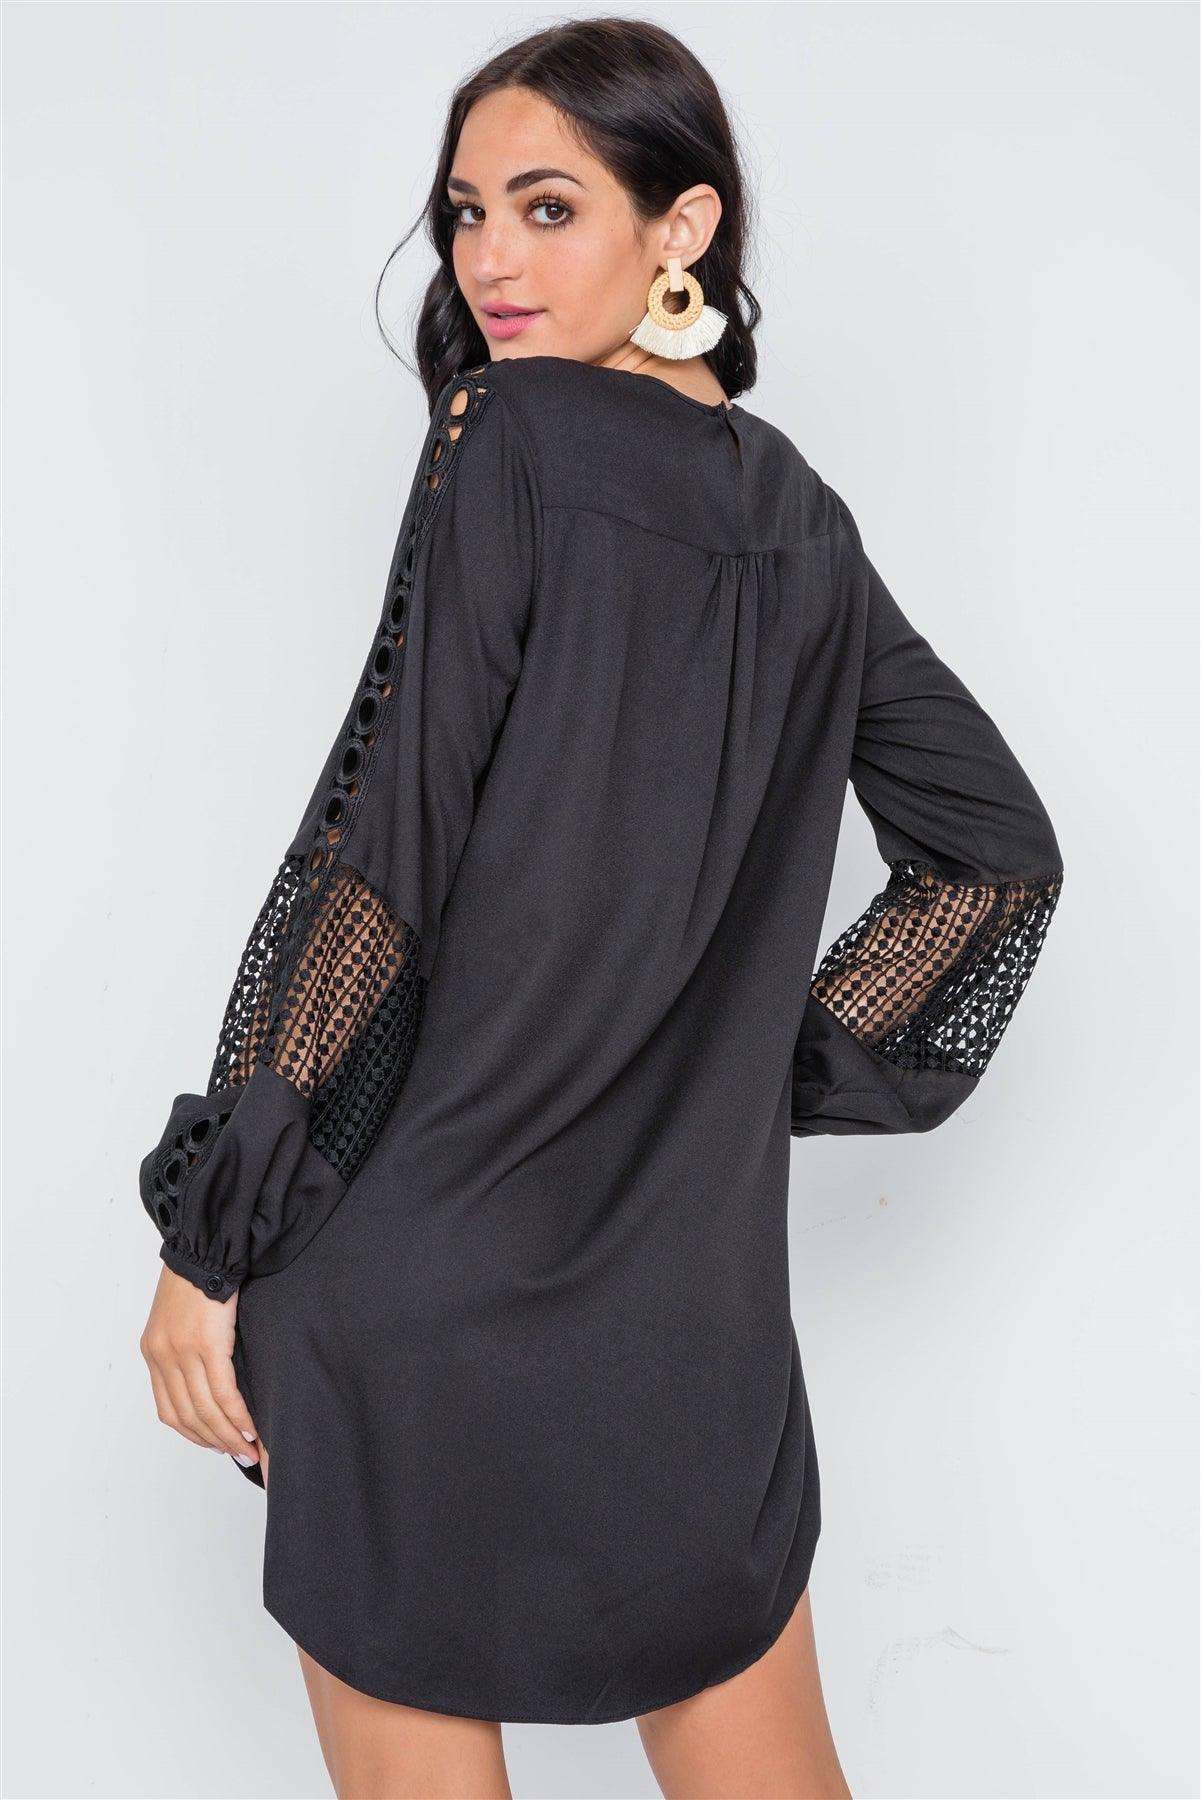 Black Crochet Trim Long Sleeve Tunic Dress